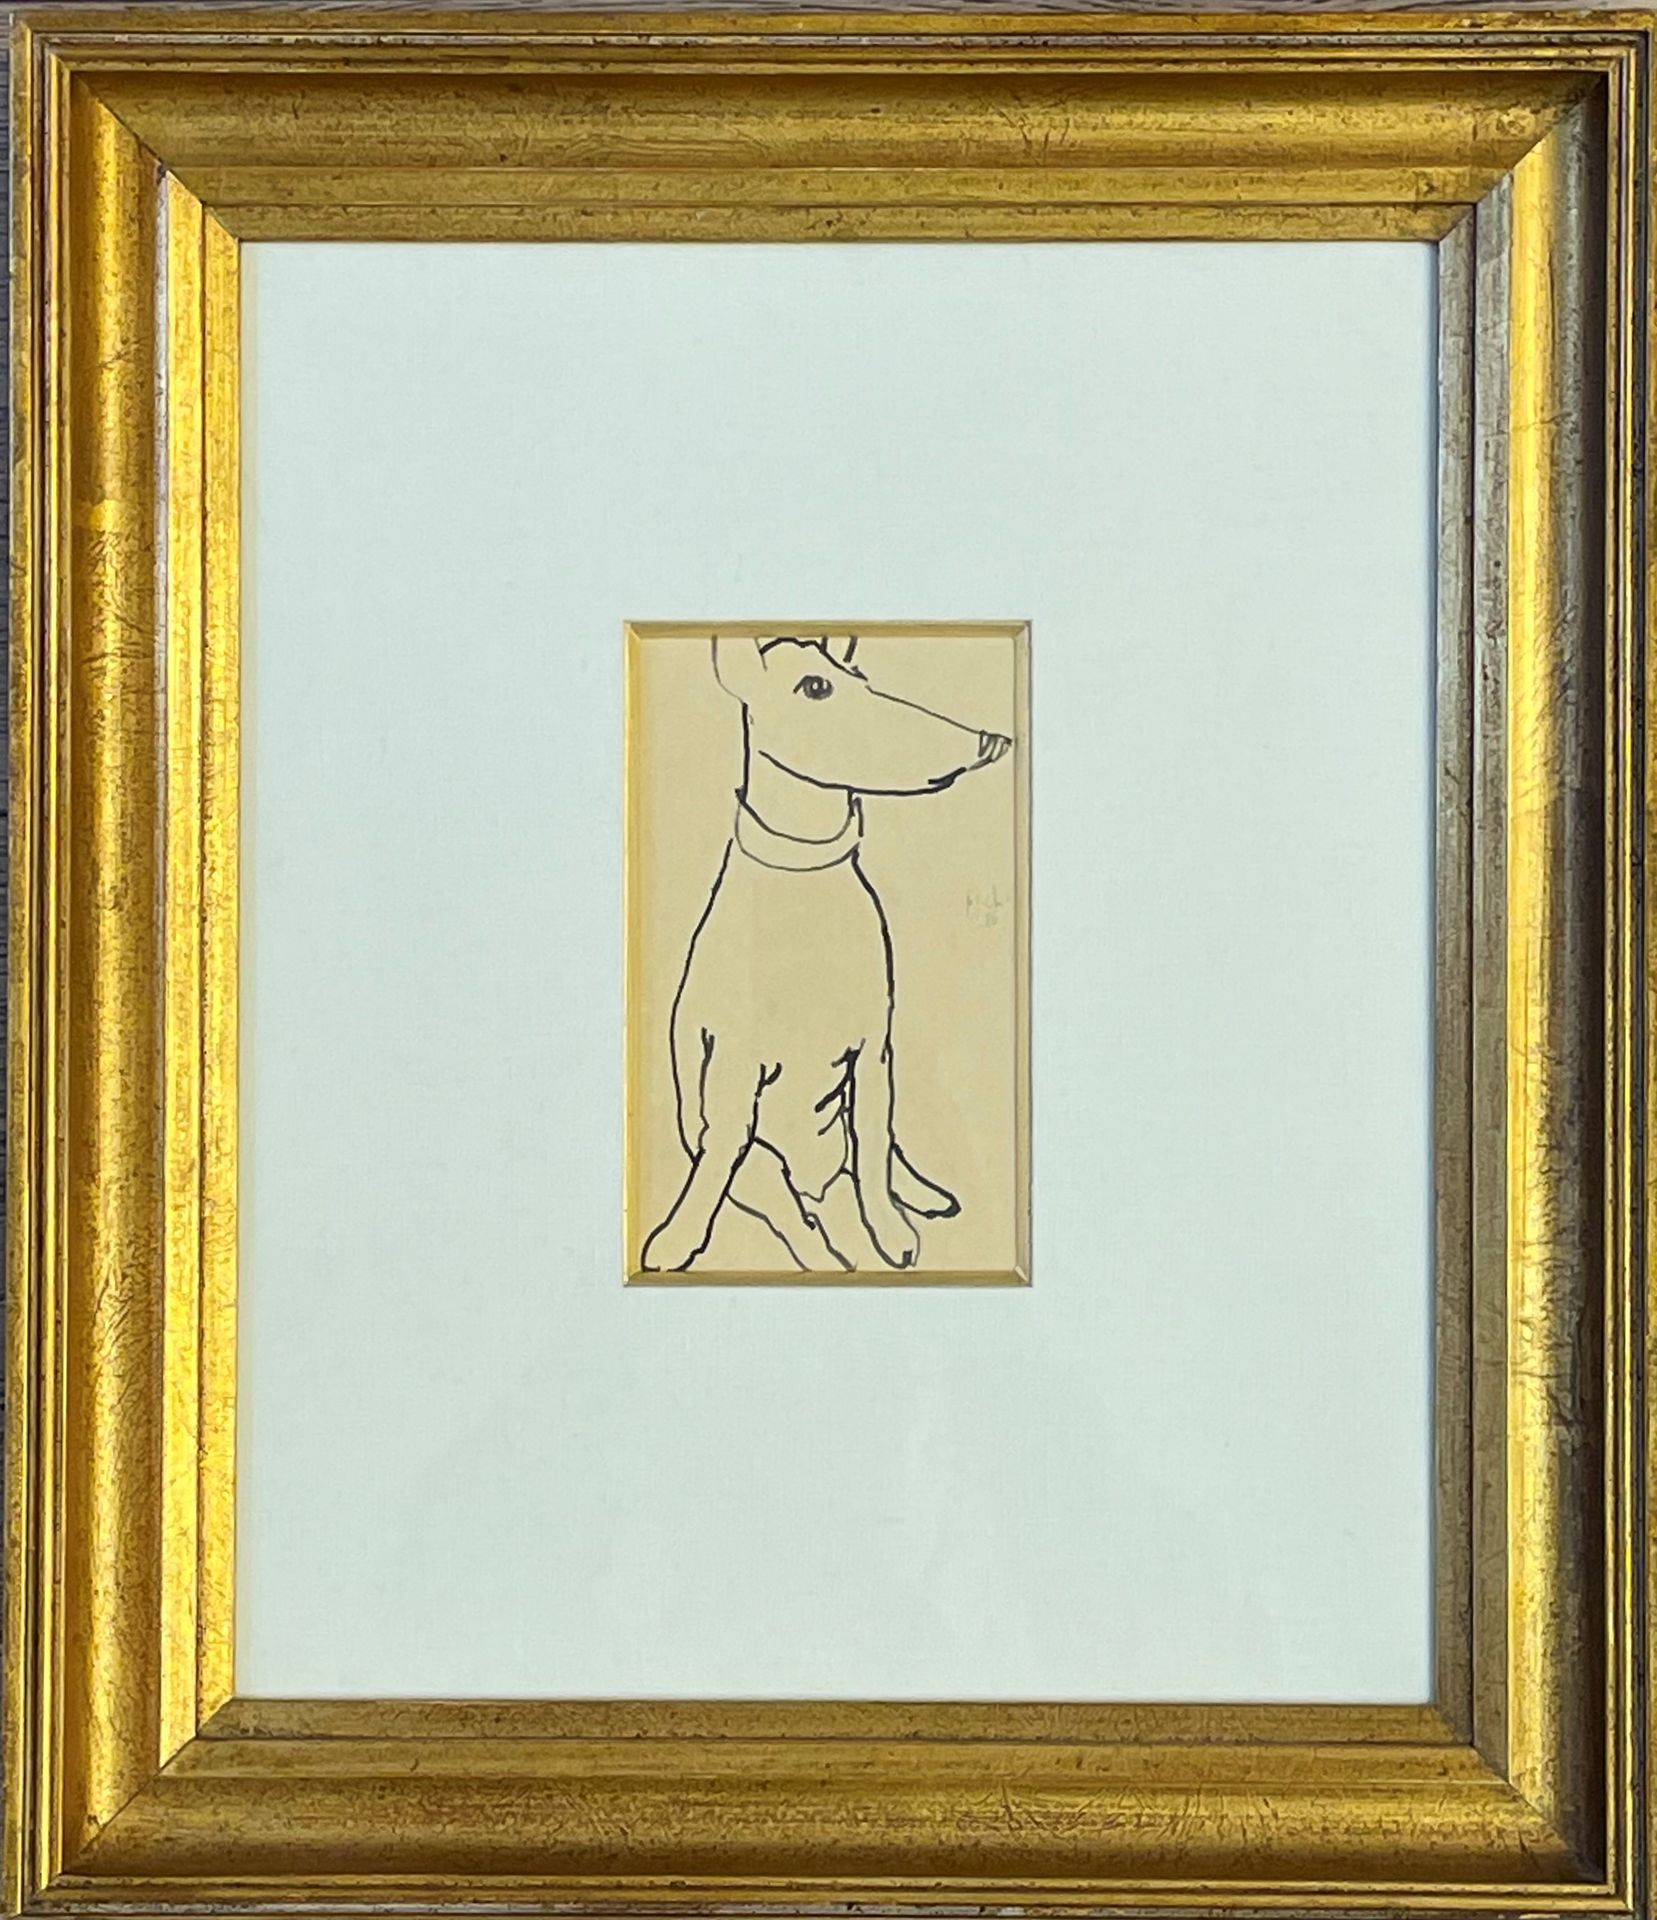 CHASSE-POT (Jean-Jules Rancillac, dit). "El perro" (1986). Dibujo a tinta china,&hellip;